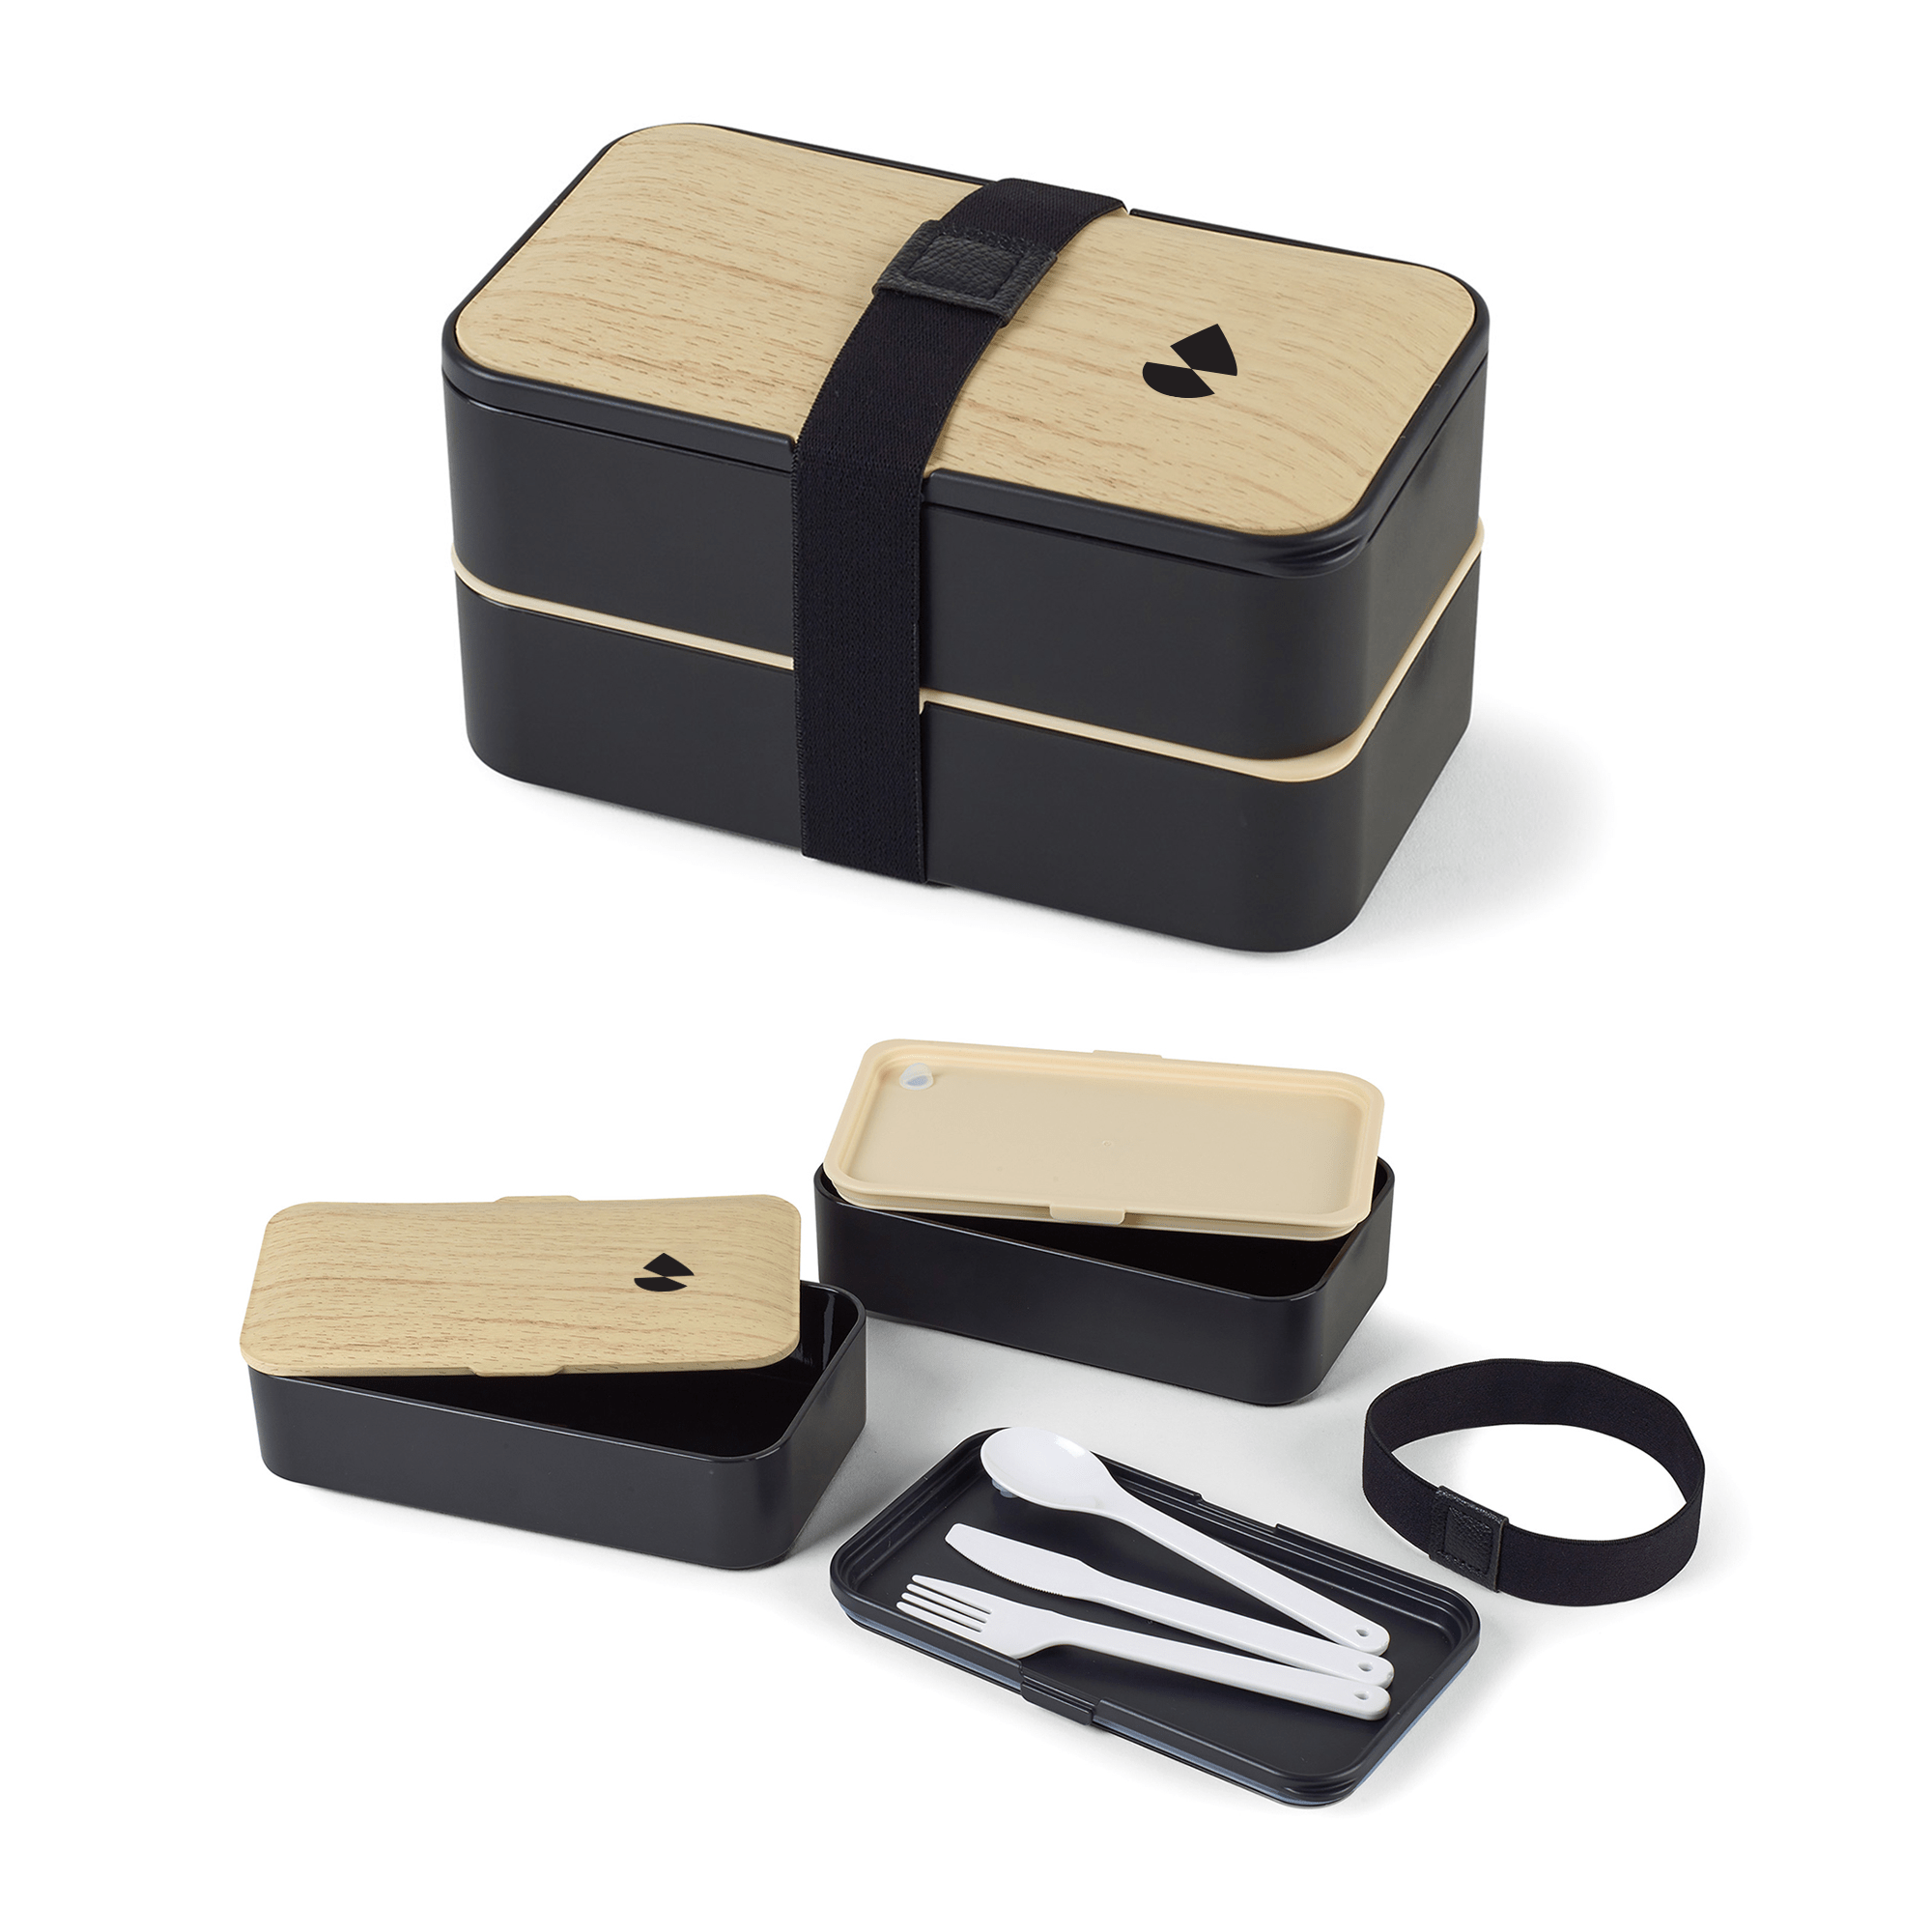 an osaka bento box, a really unique gift